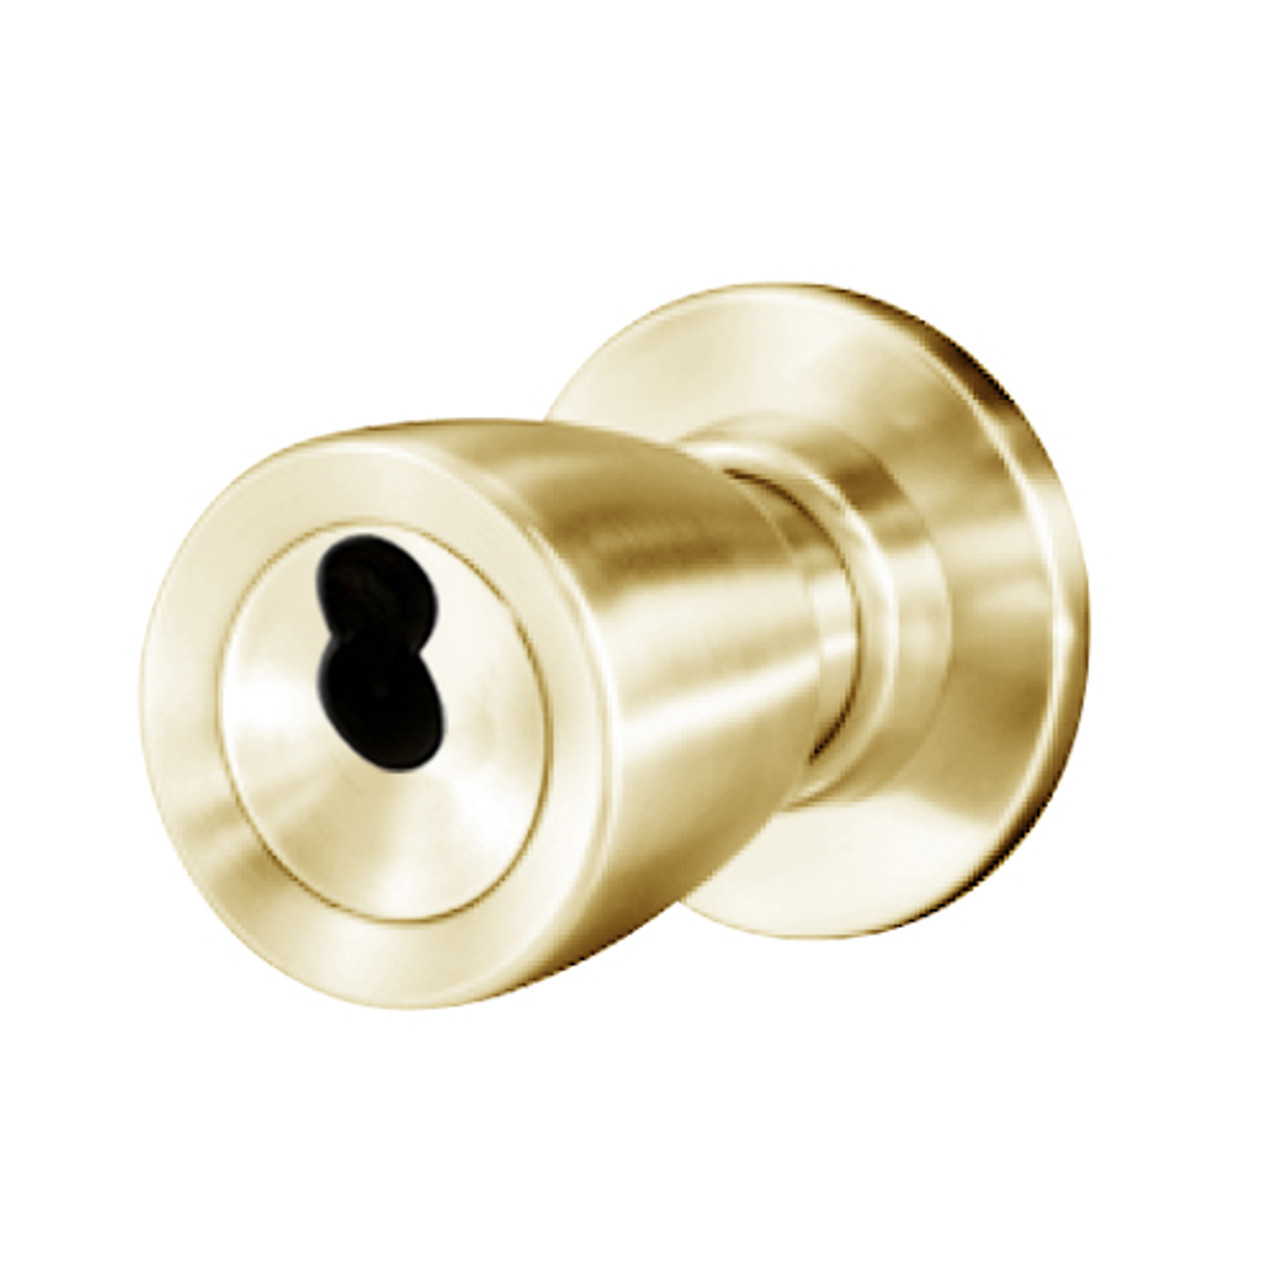 8K47YD6CS3606 Best 8K Series Exit Heavy Duty Cylindrical Knob Locks with Tulip Style in Satin Brass